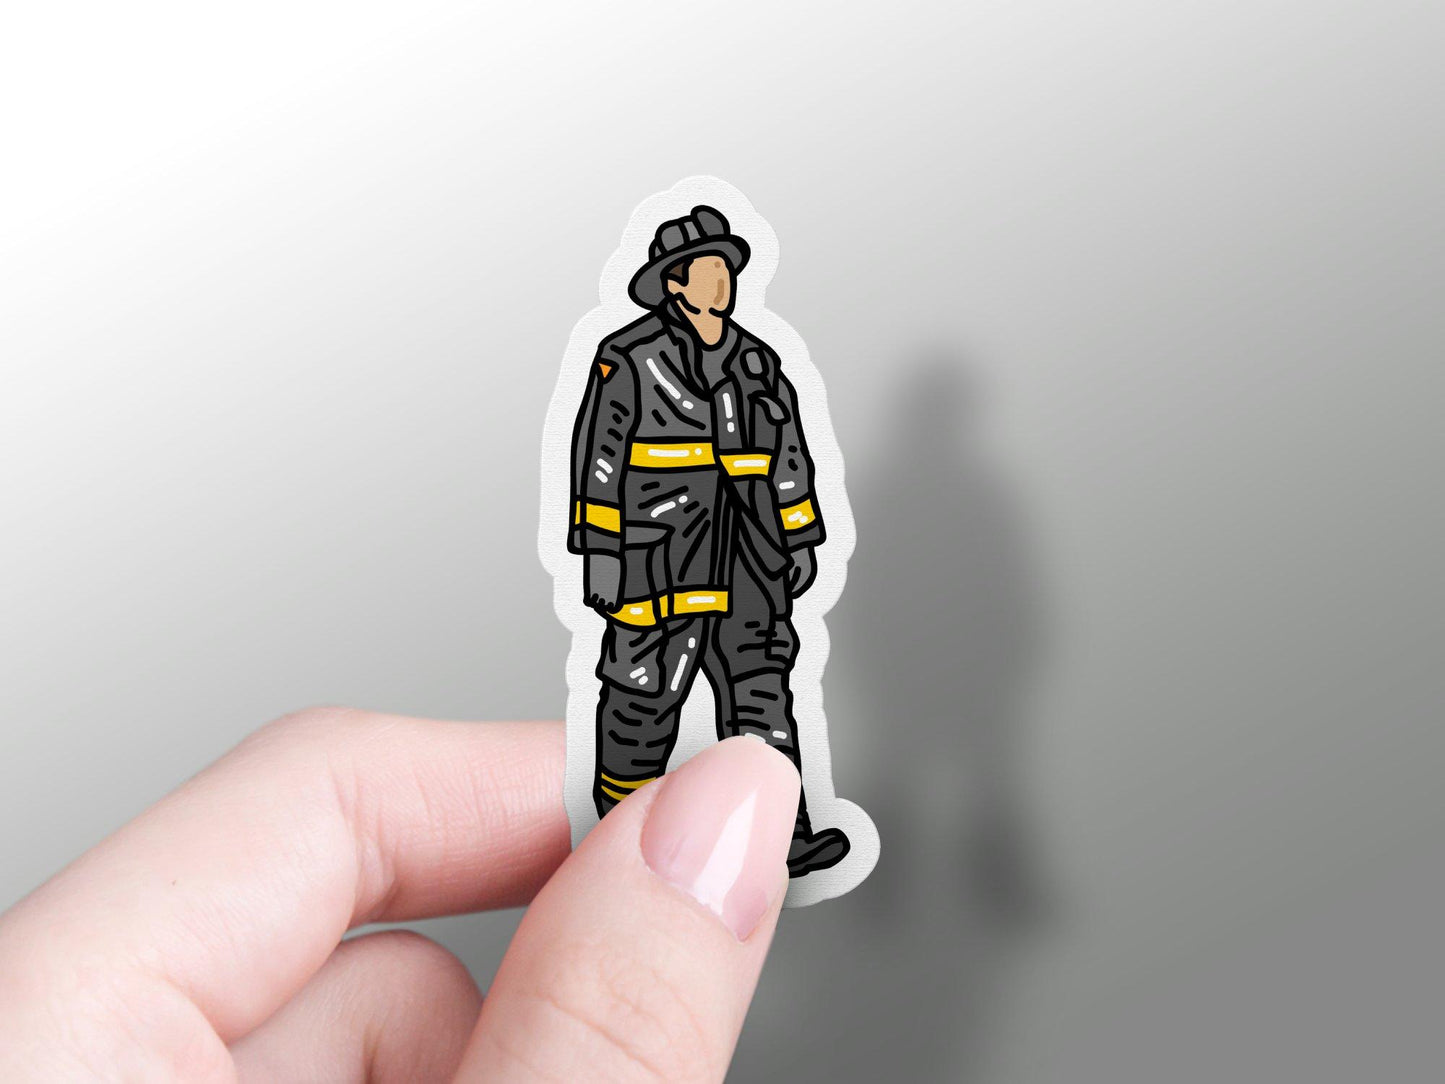 Firefighter Sticker